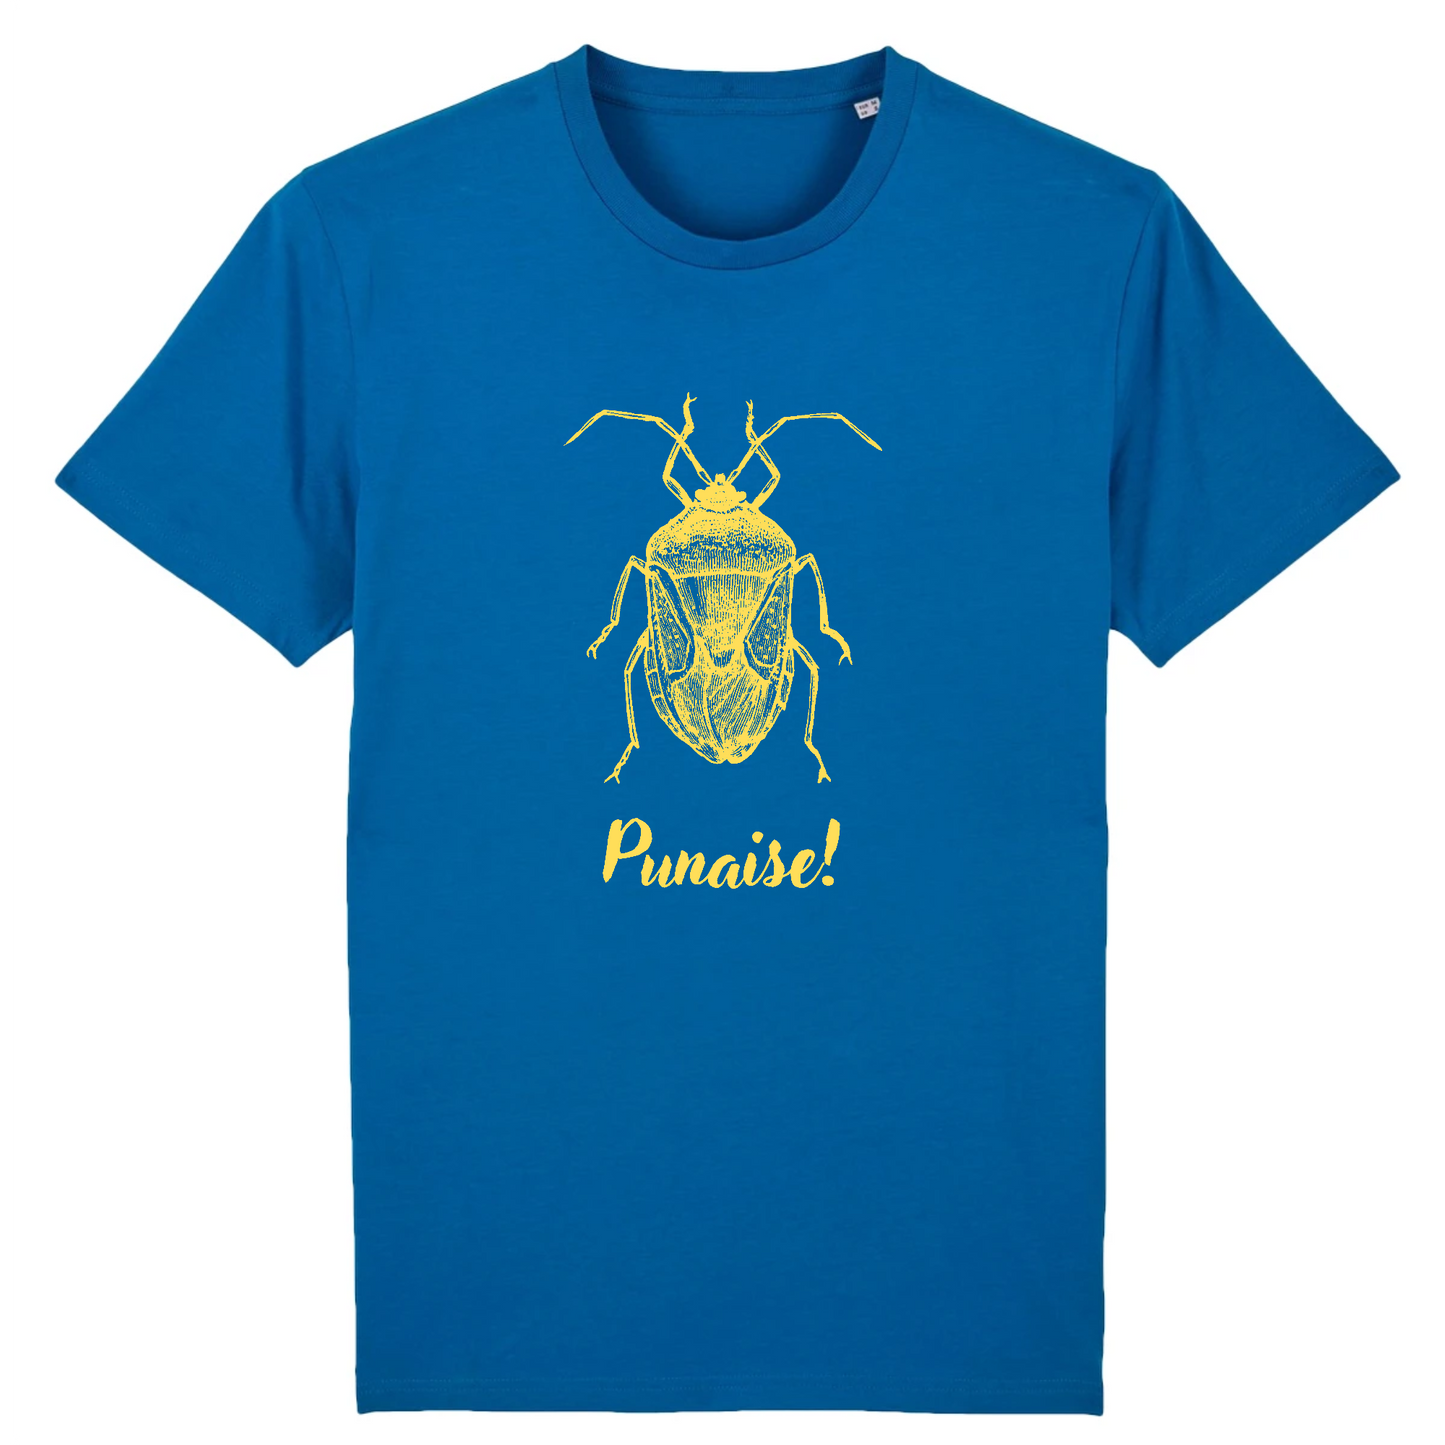 Punaise! | T-shirt Unisexe - Coton BIO - CREATOR | Bleu